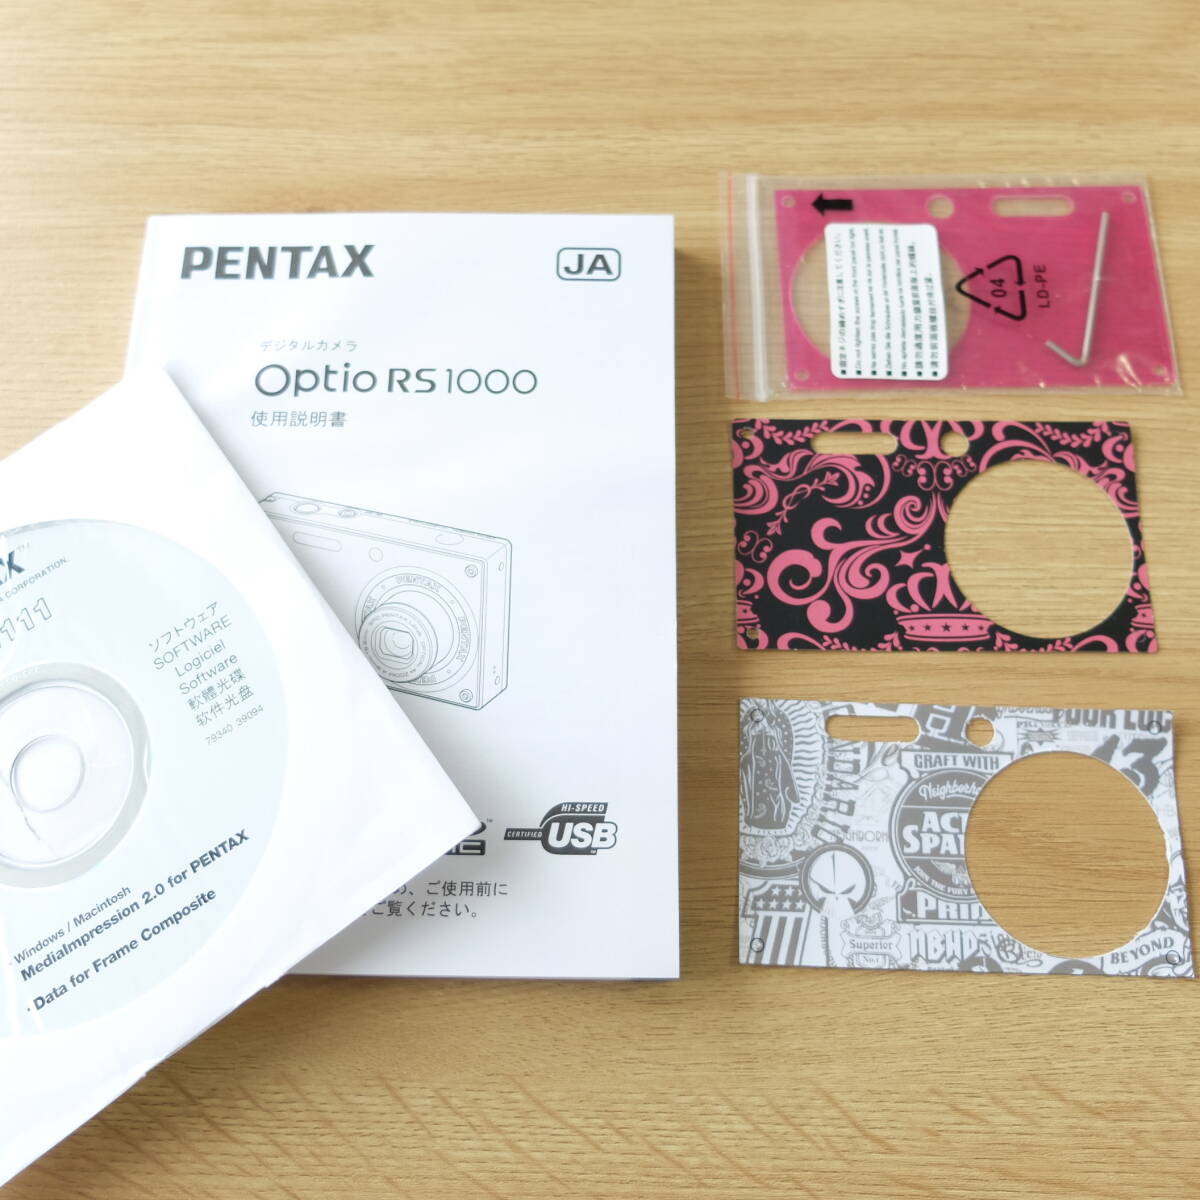 (m-Pa-93) Pentax PENTAX Optio RS1000 owner manual * original box only 